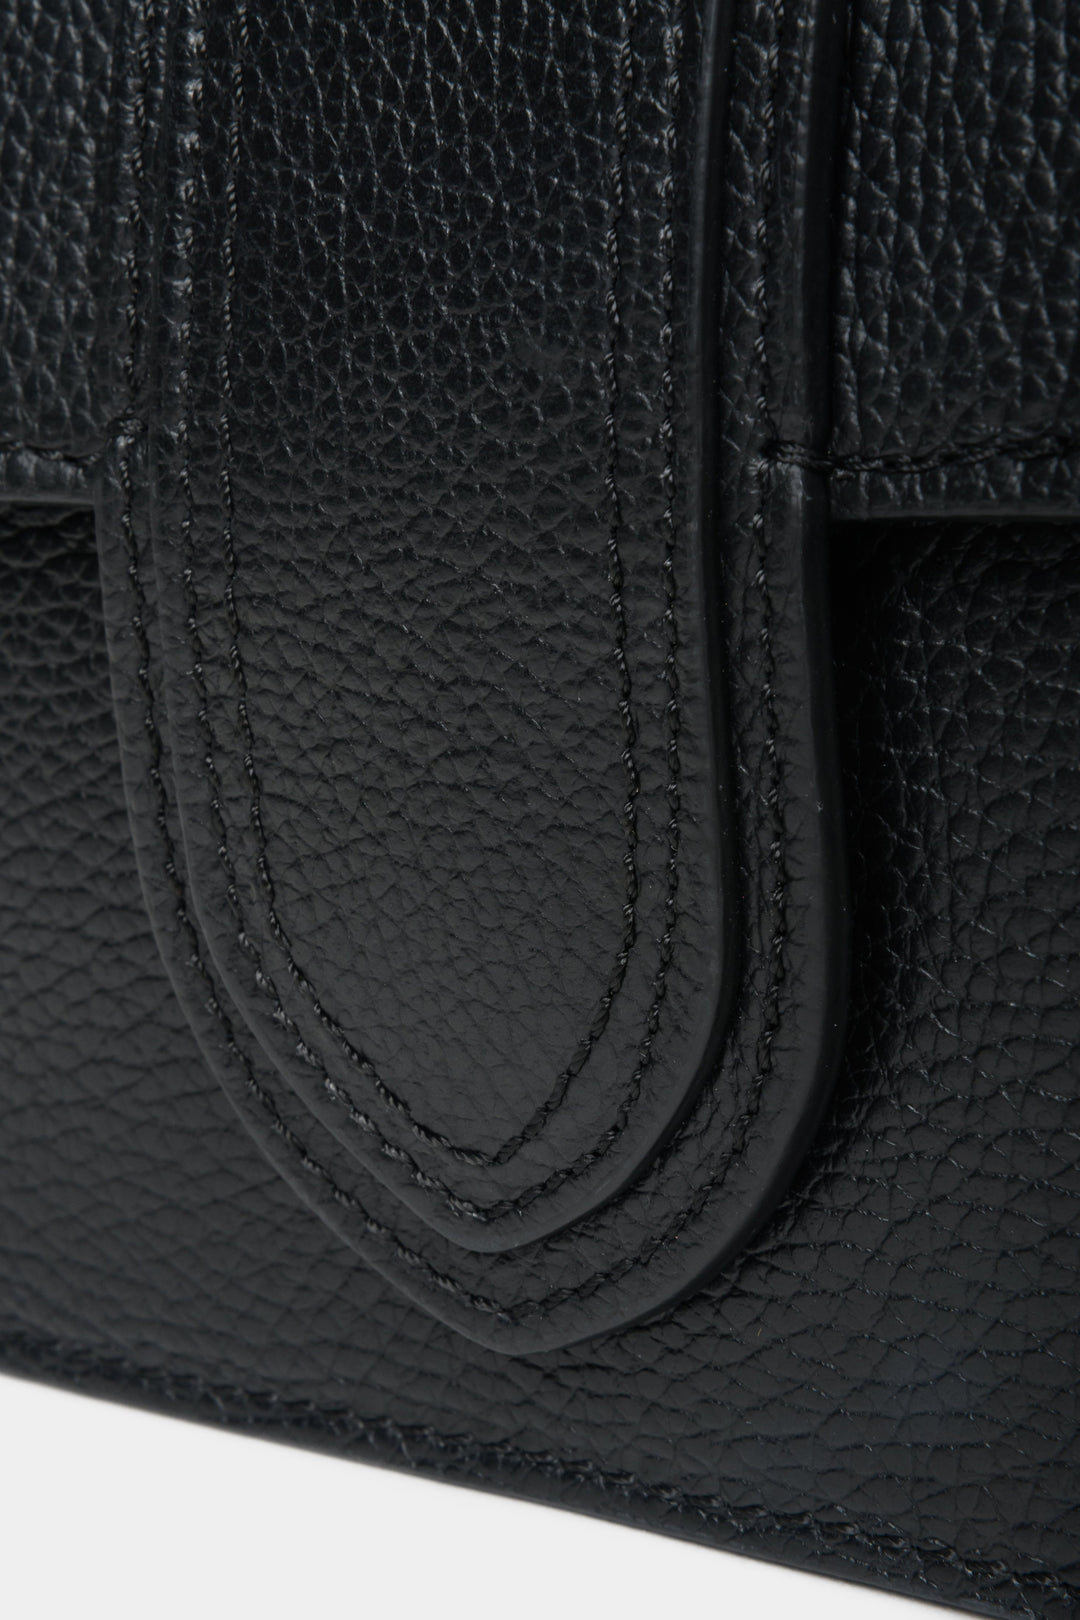 Black Estro women's leather handbag - close-up of decorative clasp.